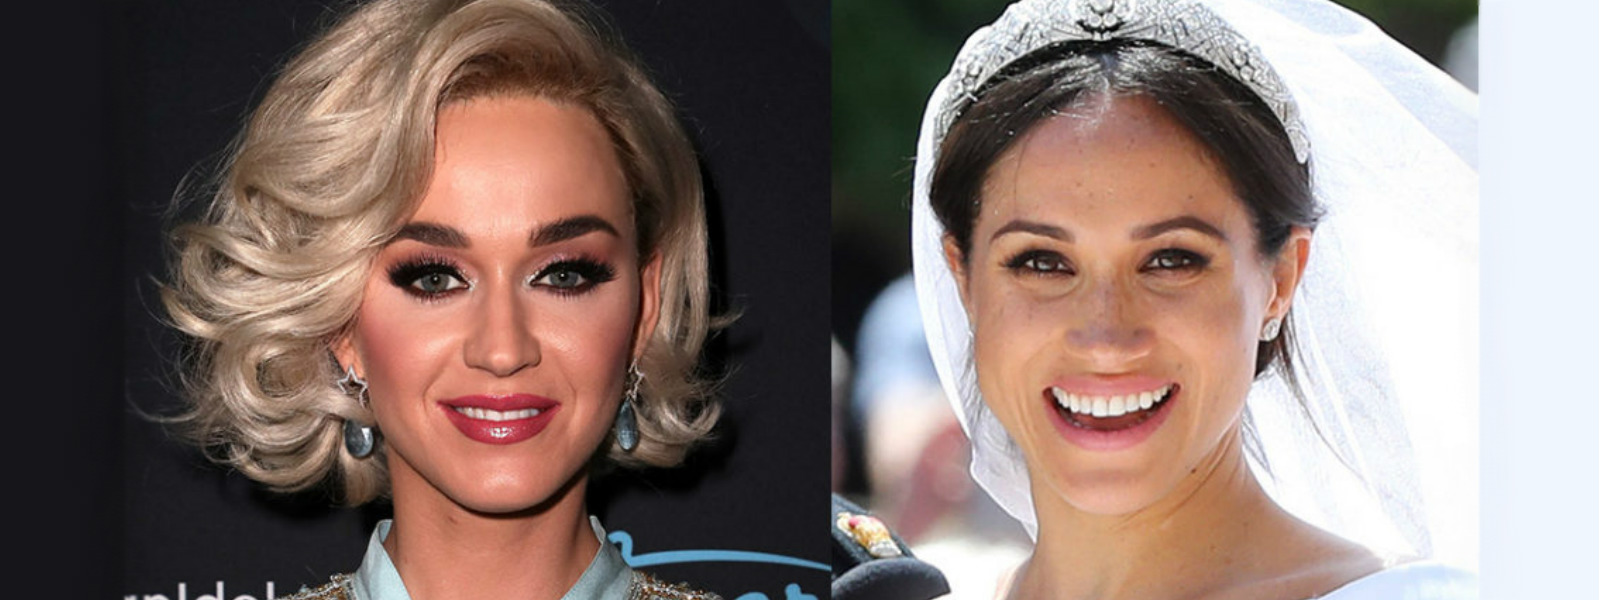 Katy Perry criticise Meghan Markle's wedding dress